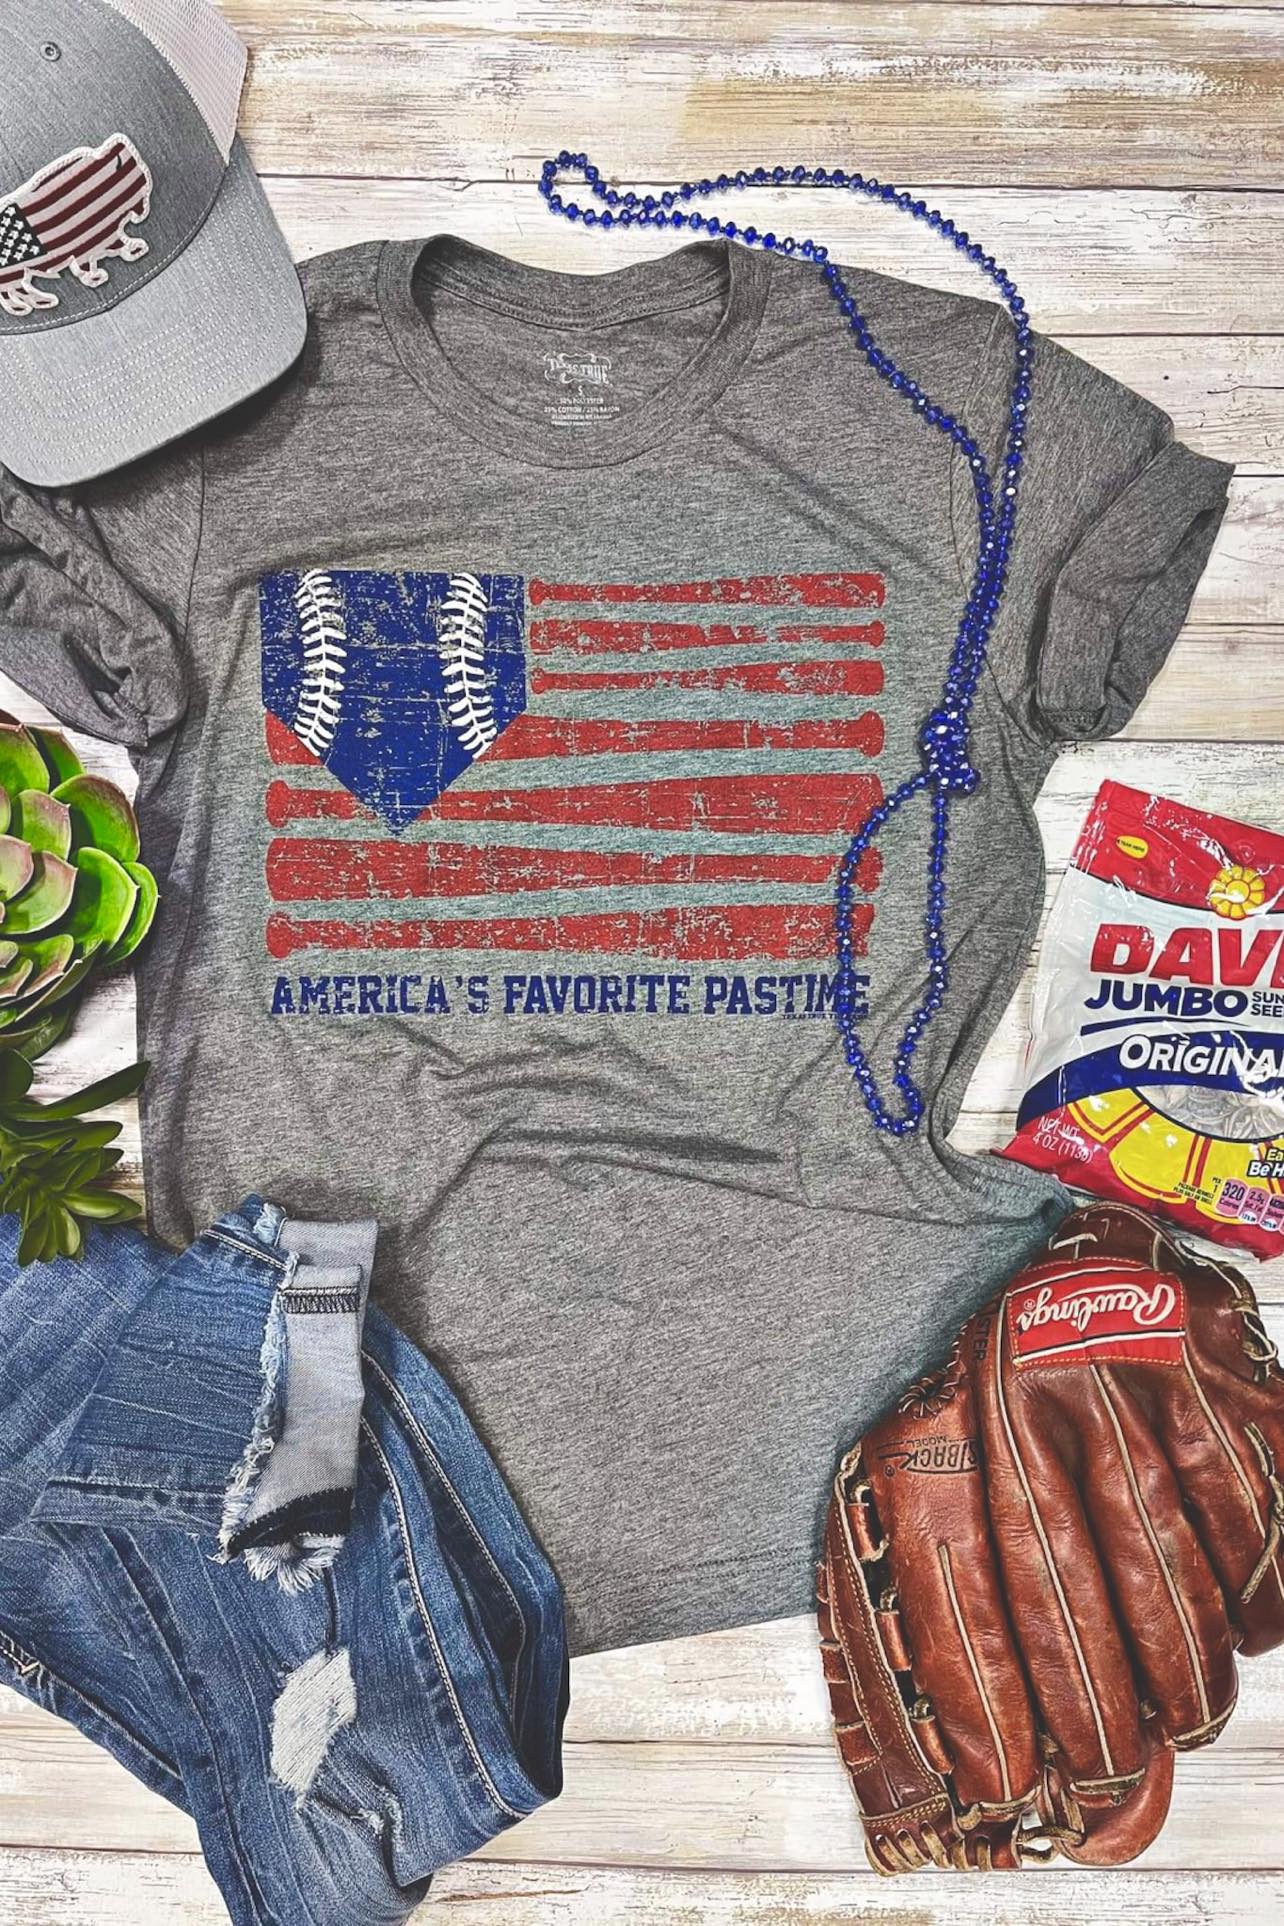 [America’s Favorite Pastime] Tee Shirt